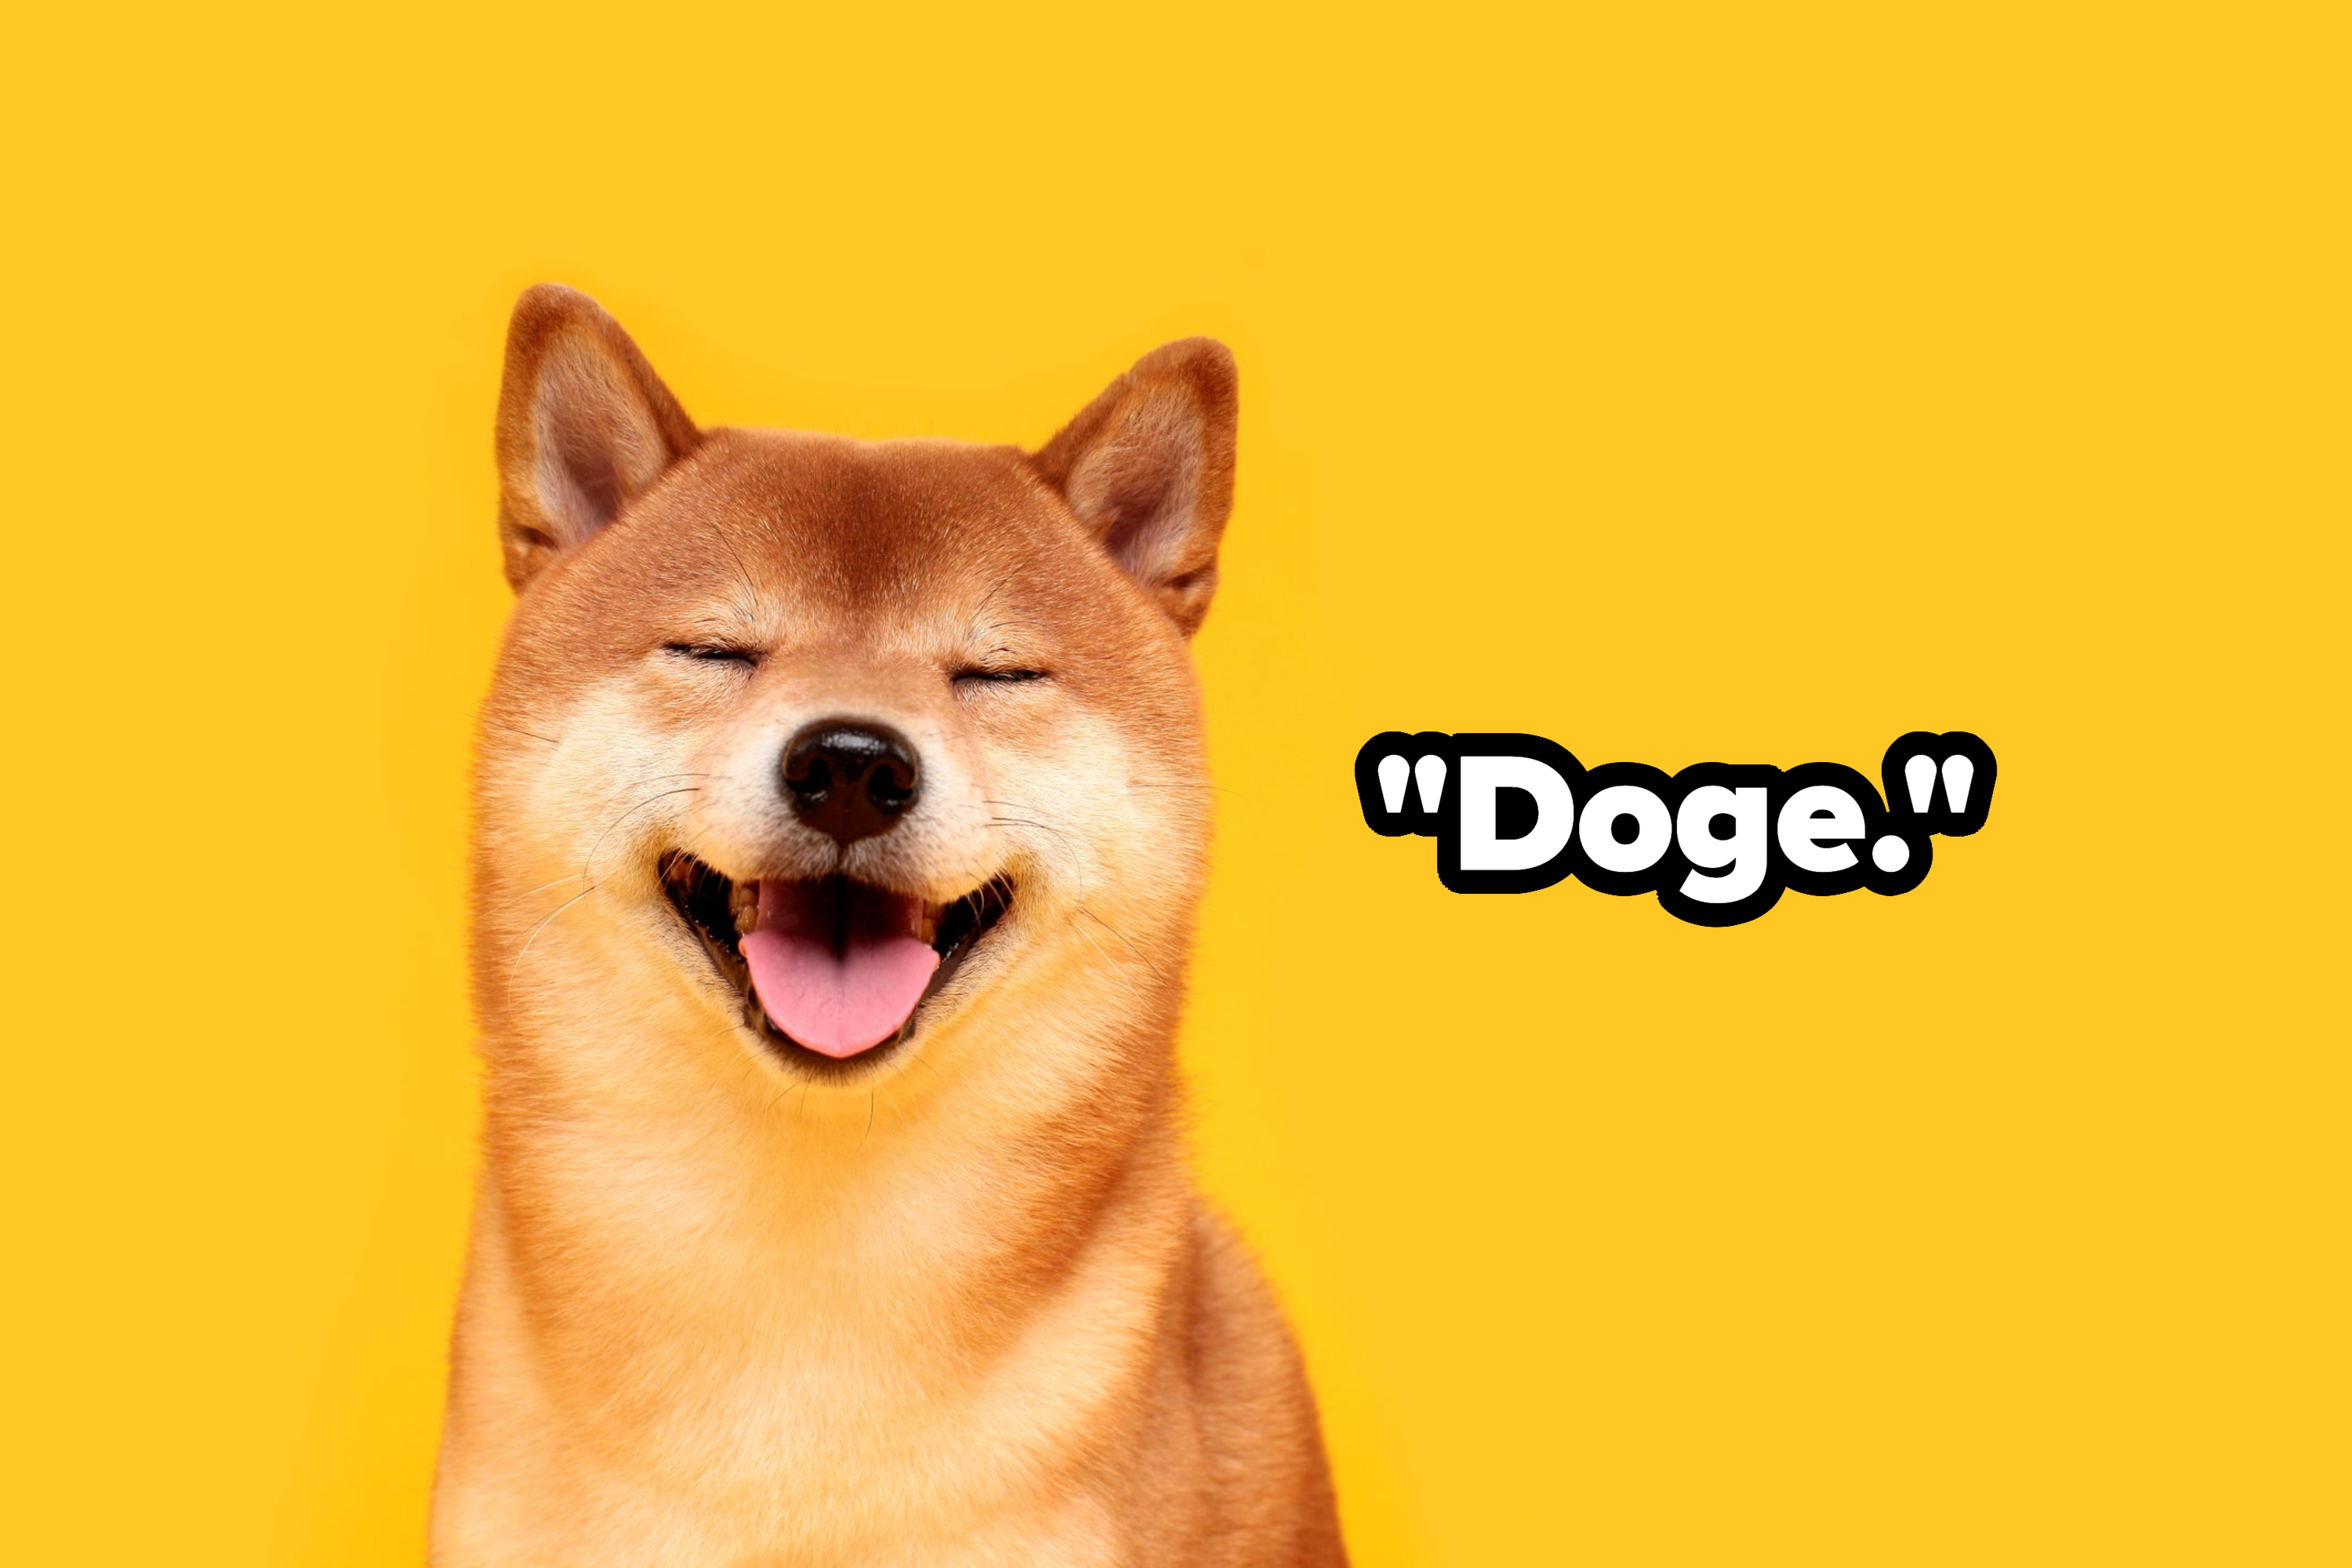 A shiba inu dog smiling